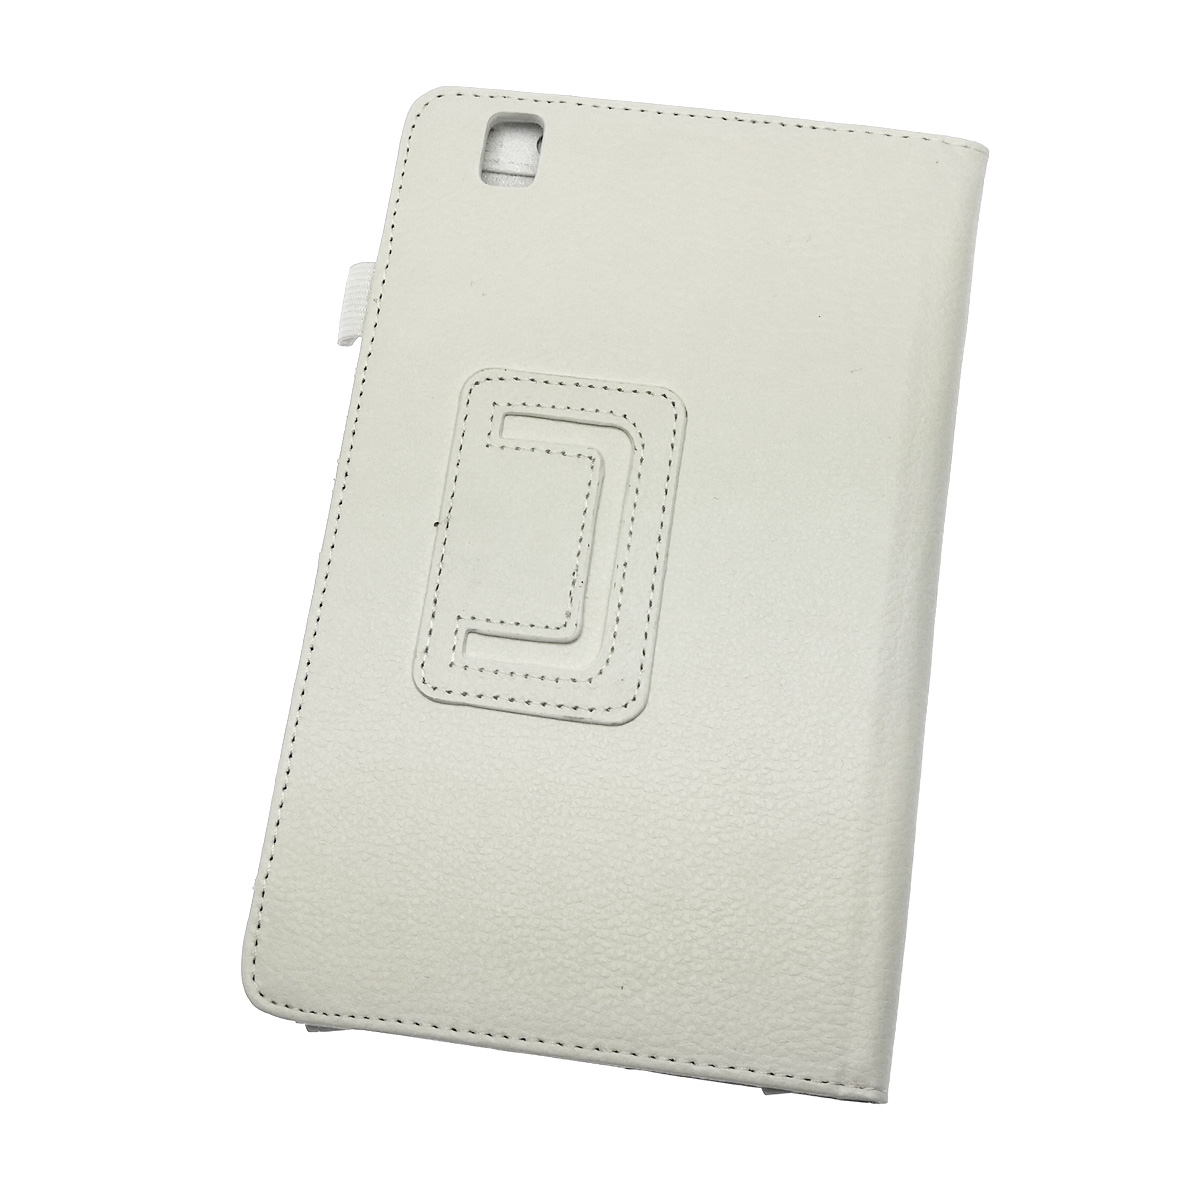 Чехол книжка для SAMSUNG Galaxy Tab Pro 8.4 (SM-T320, SM-T325), экокожа, цвет белый